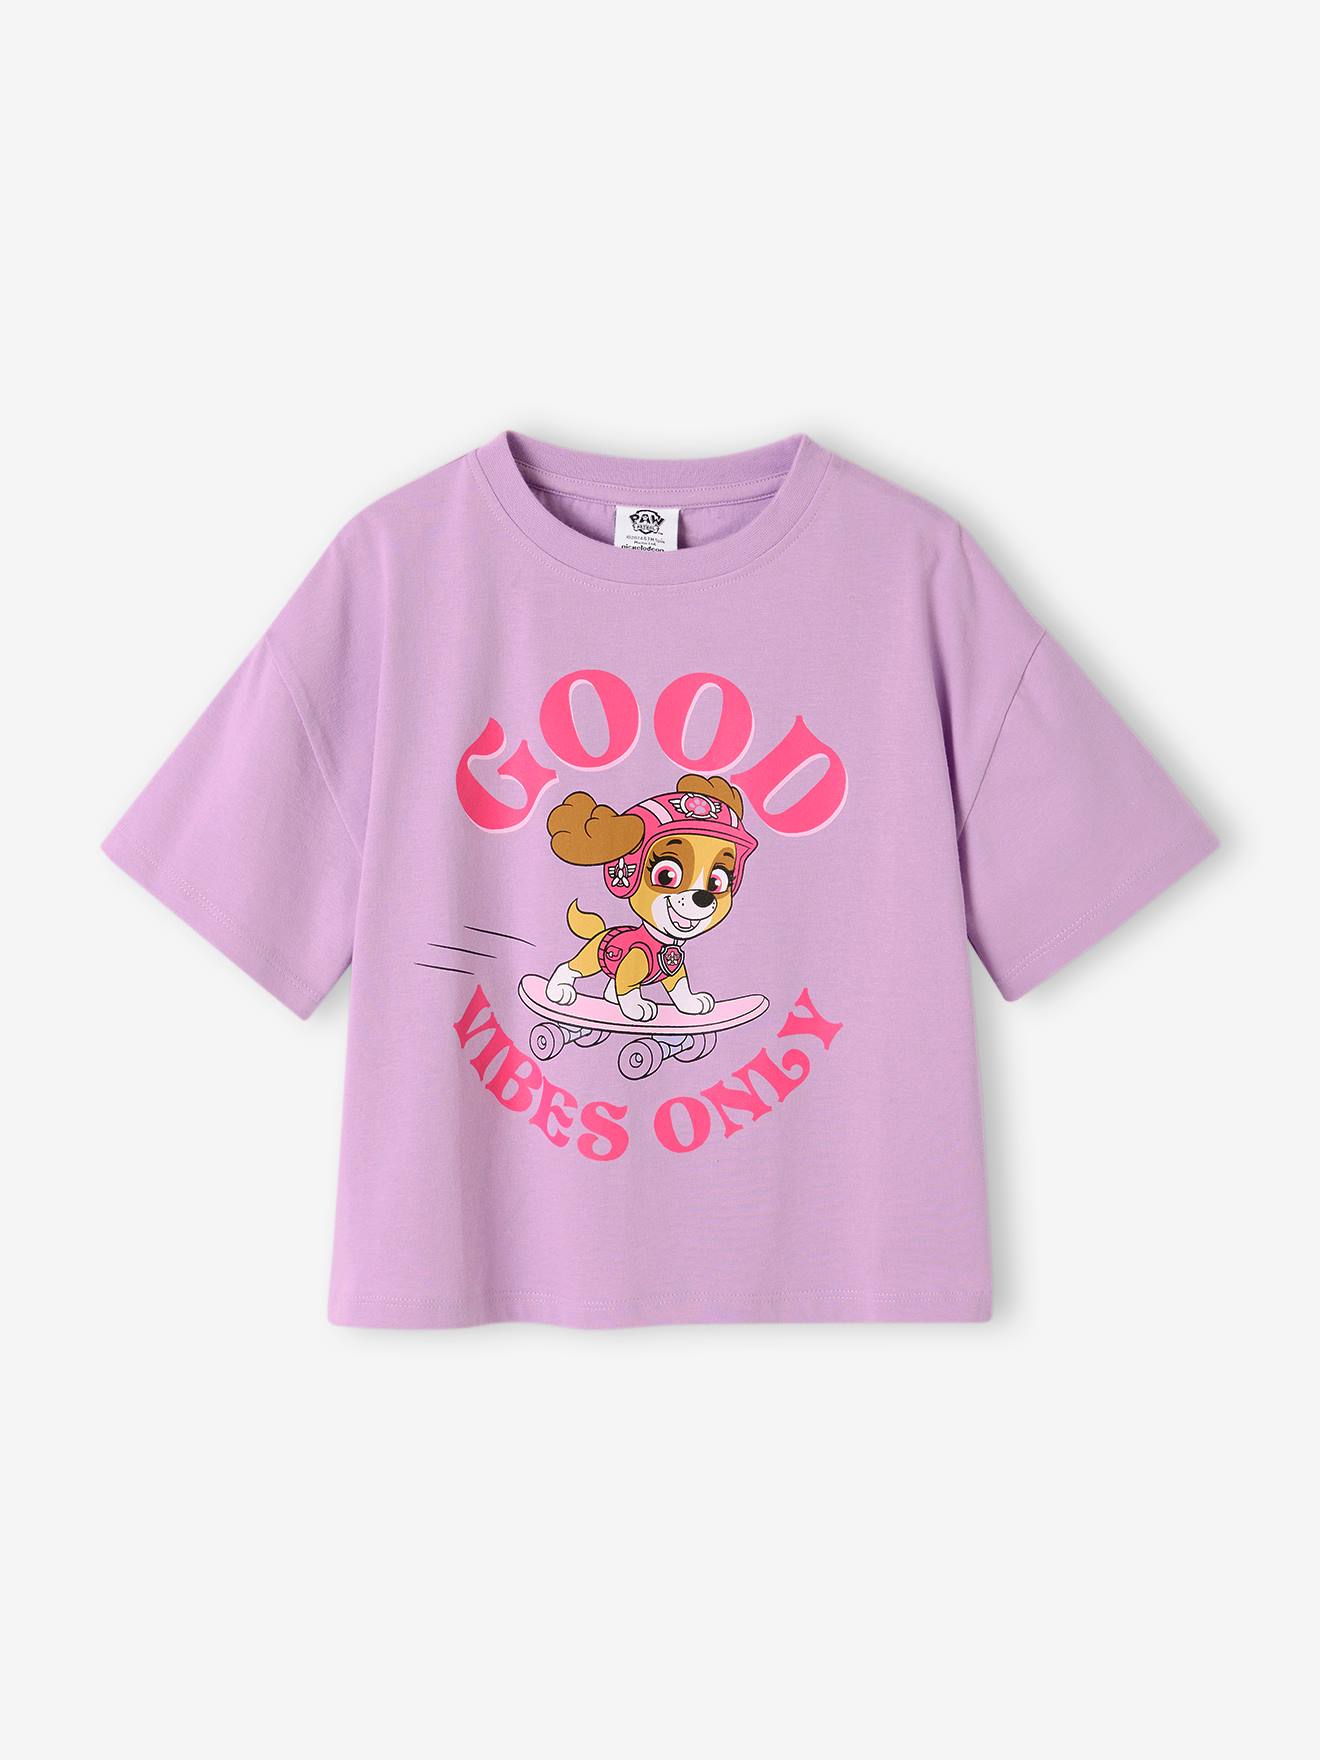 Paw Patrol(r) T-Shirt for Girls lilac